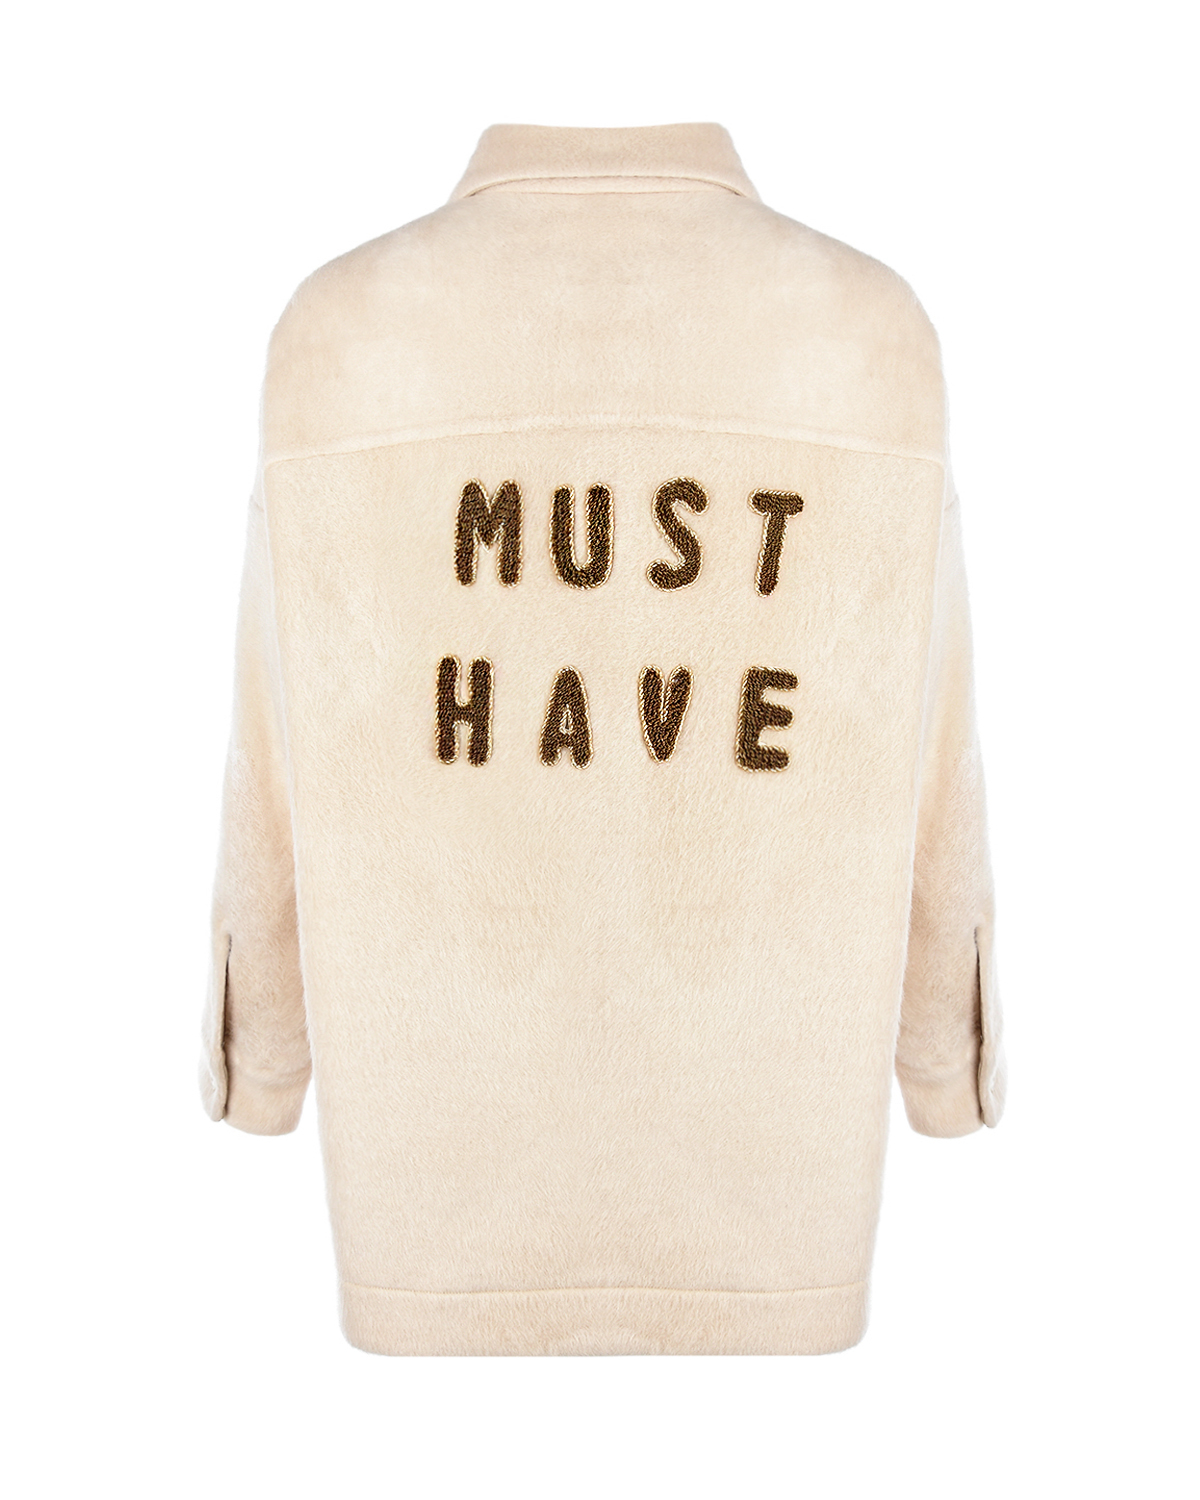 Куртка молочного цвета с вышивкой Forte dei Marmi Couture, размер 44 - фото 5